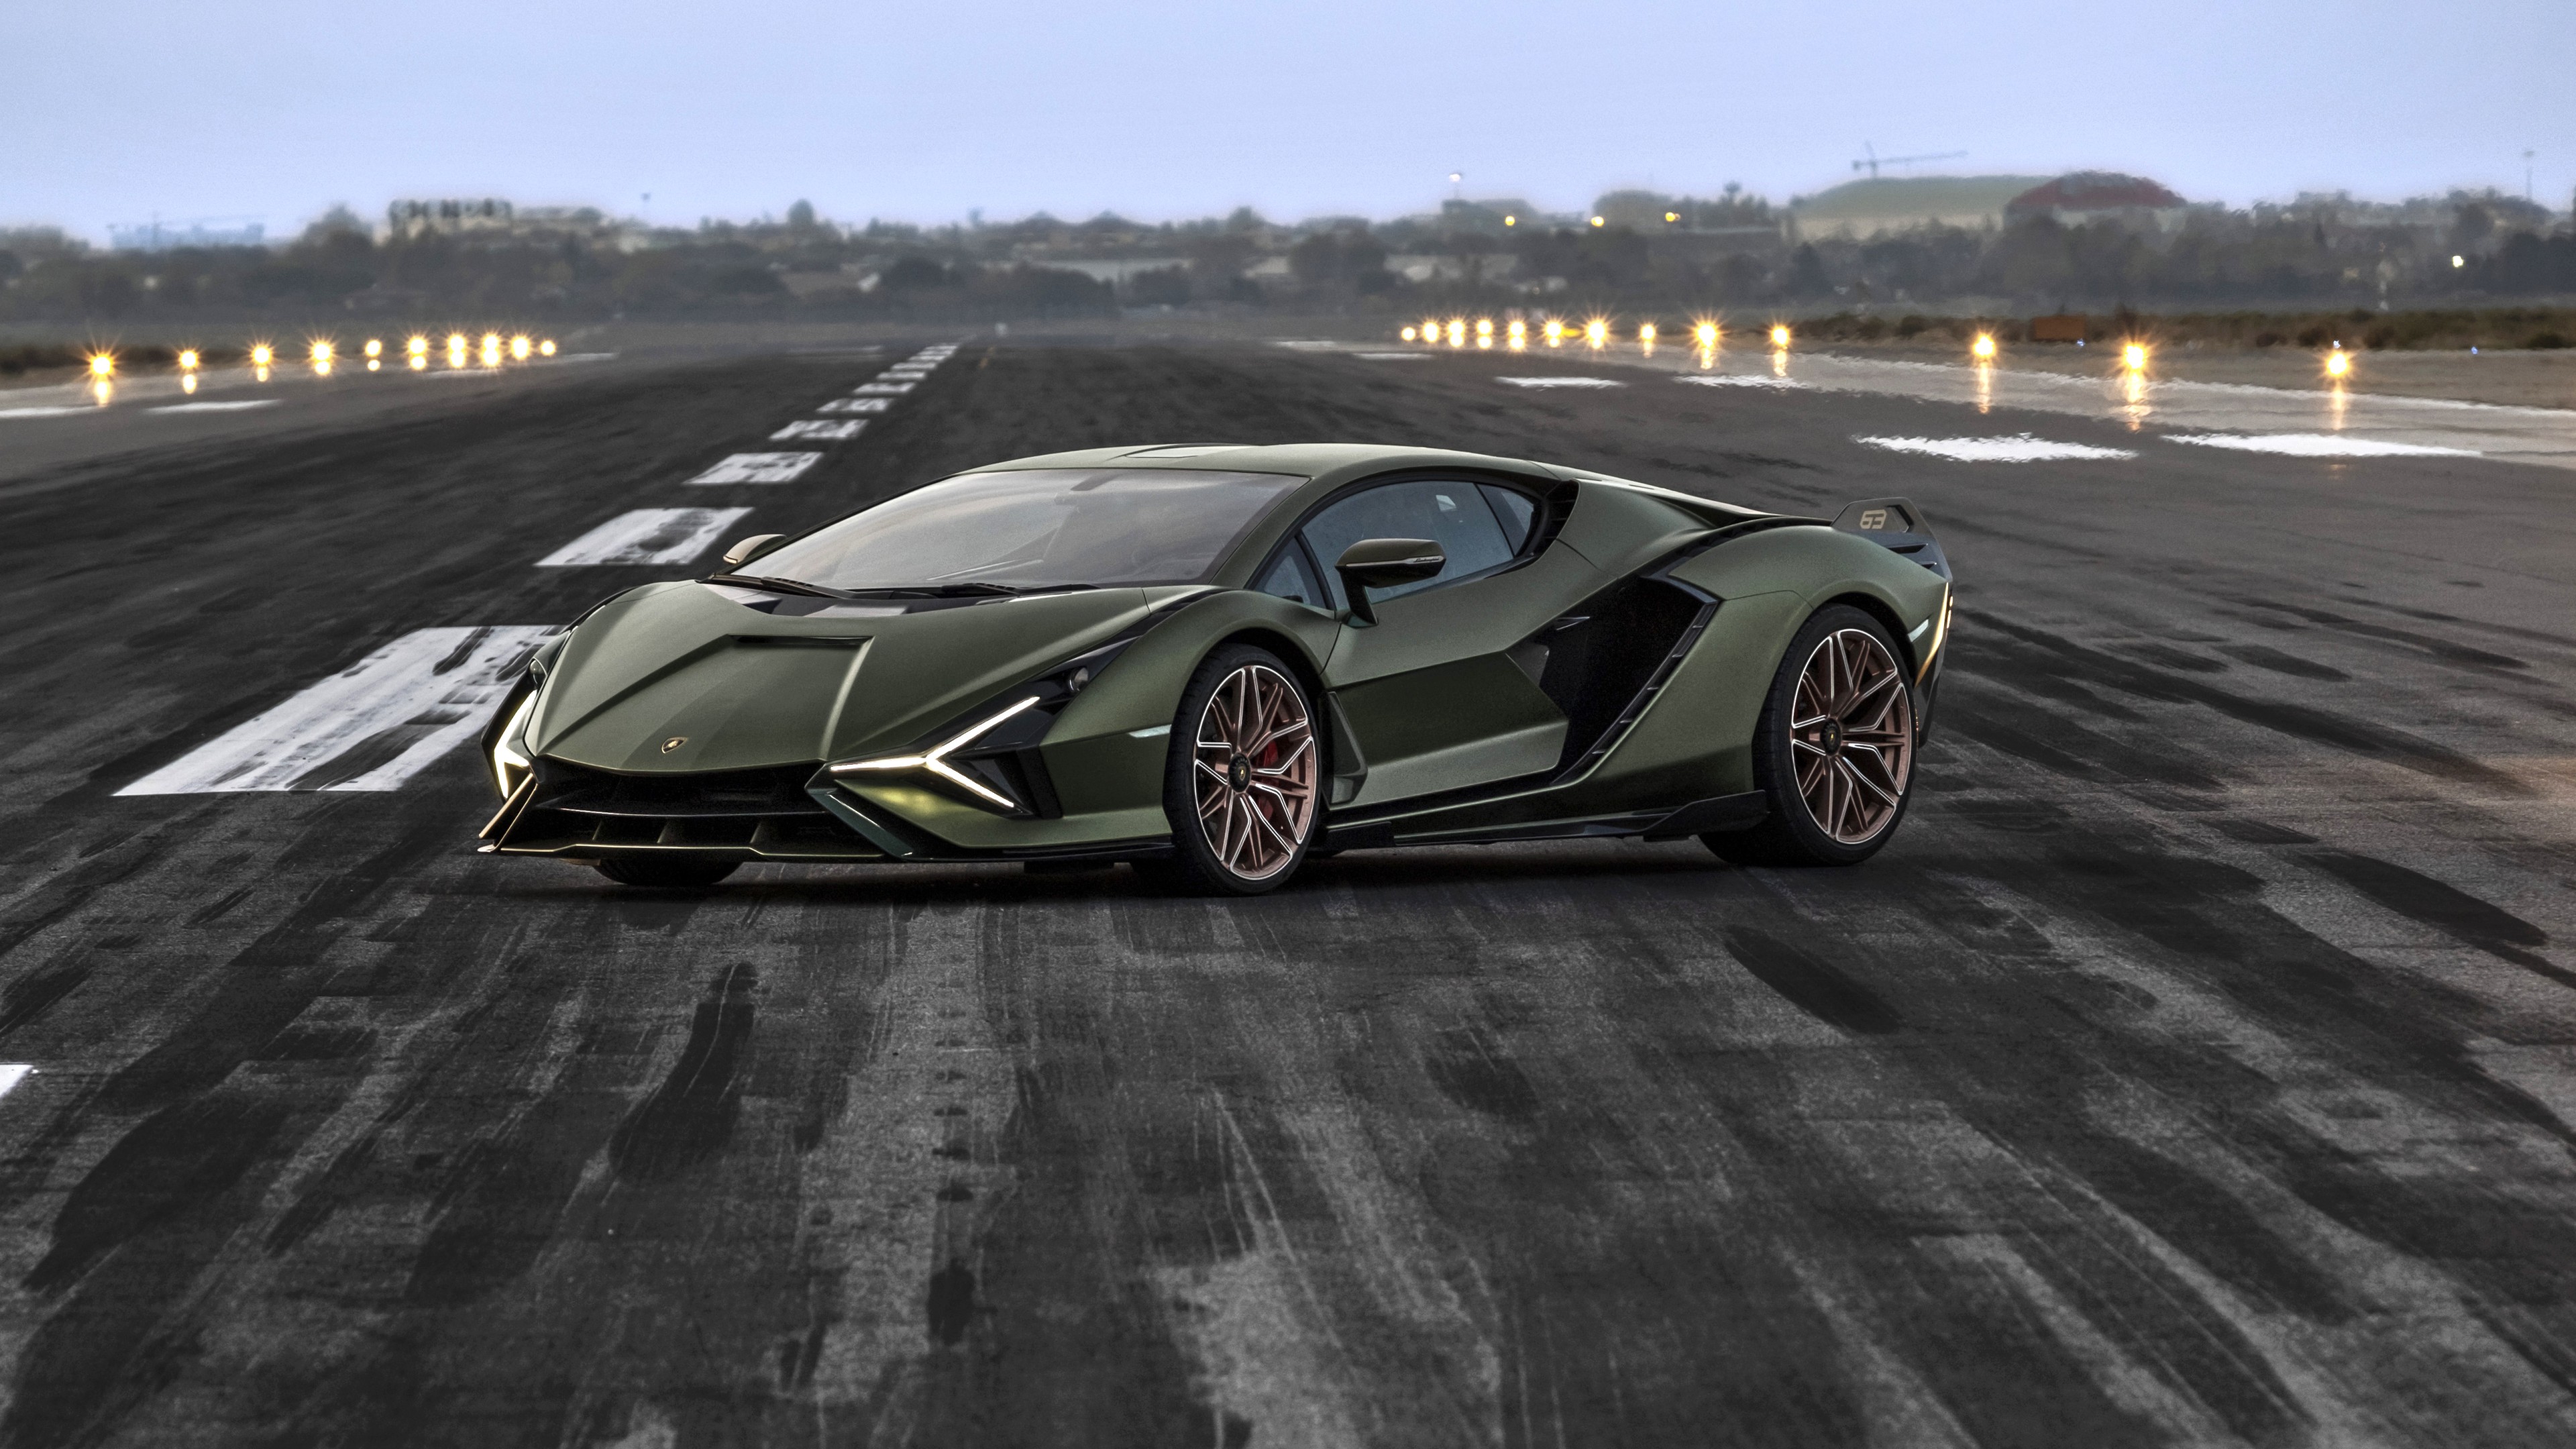 Lamborghini Sián FKP 37 2021 5K 8 Wallpaper | HD Car Wallpapers | ID #17119